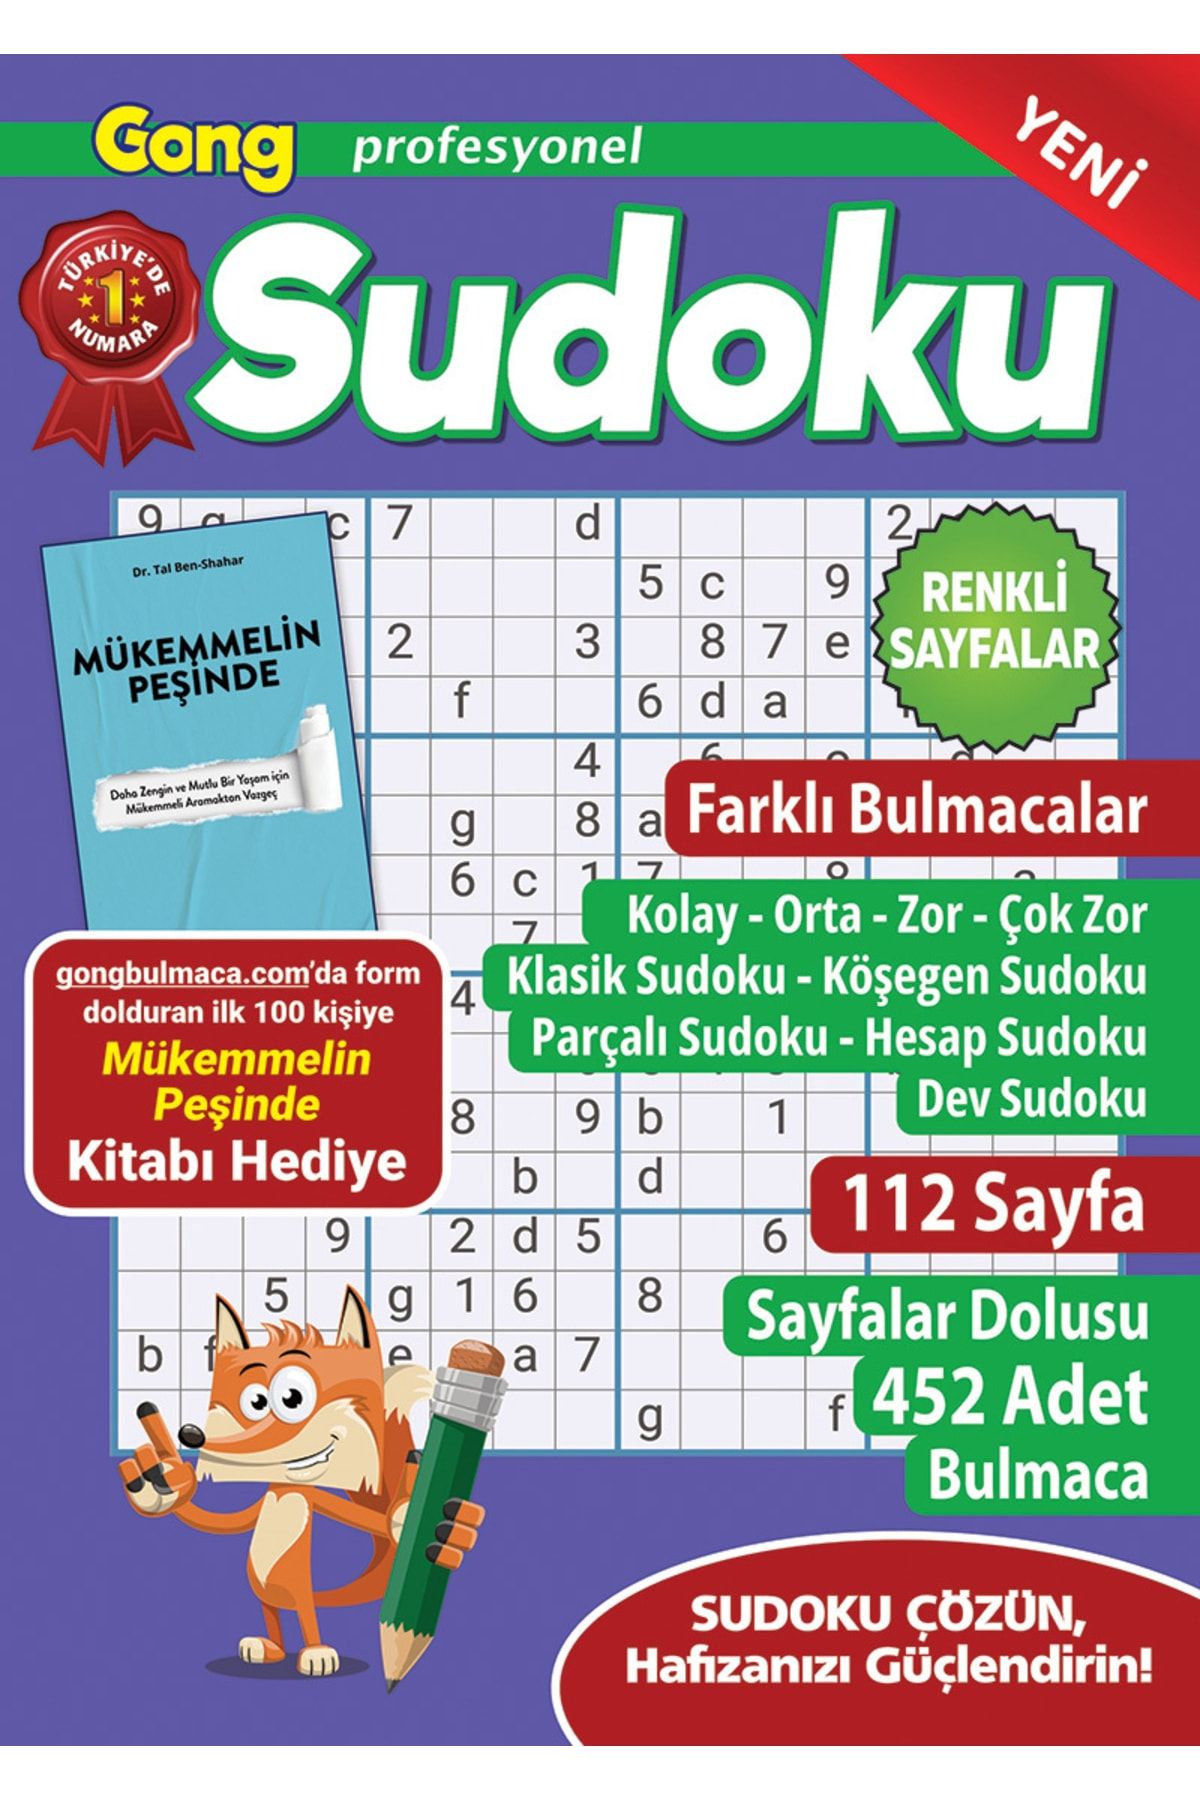 Gong Profesyonel Sudoku 014